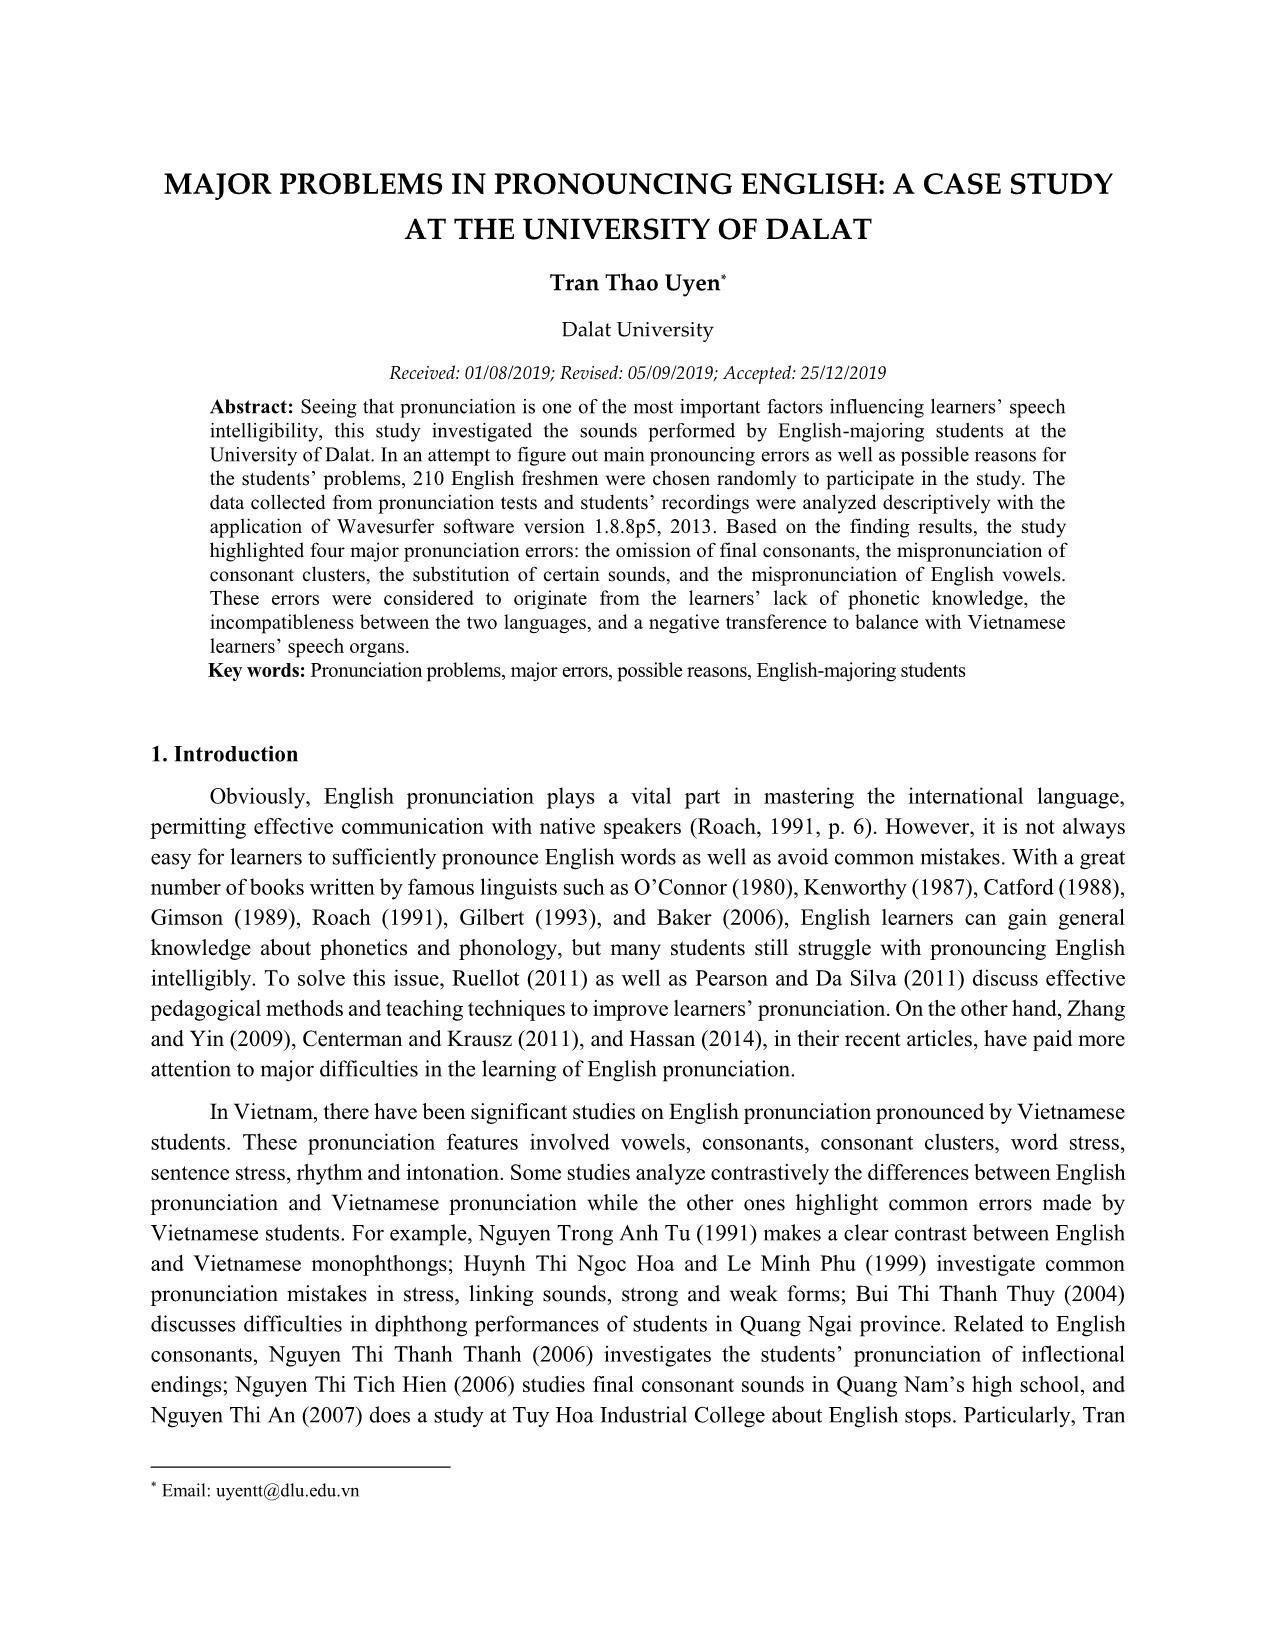 Major problems in pronouncing English: A case study at the University of Dalat trang 1